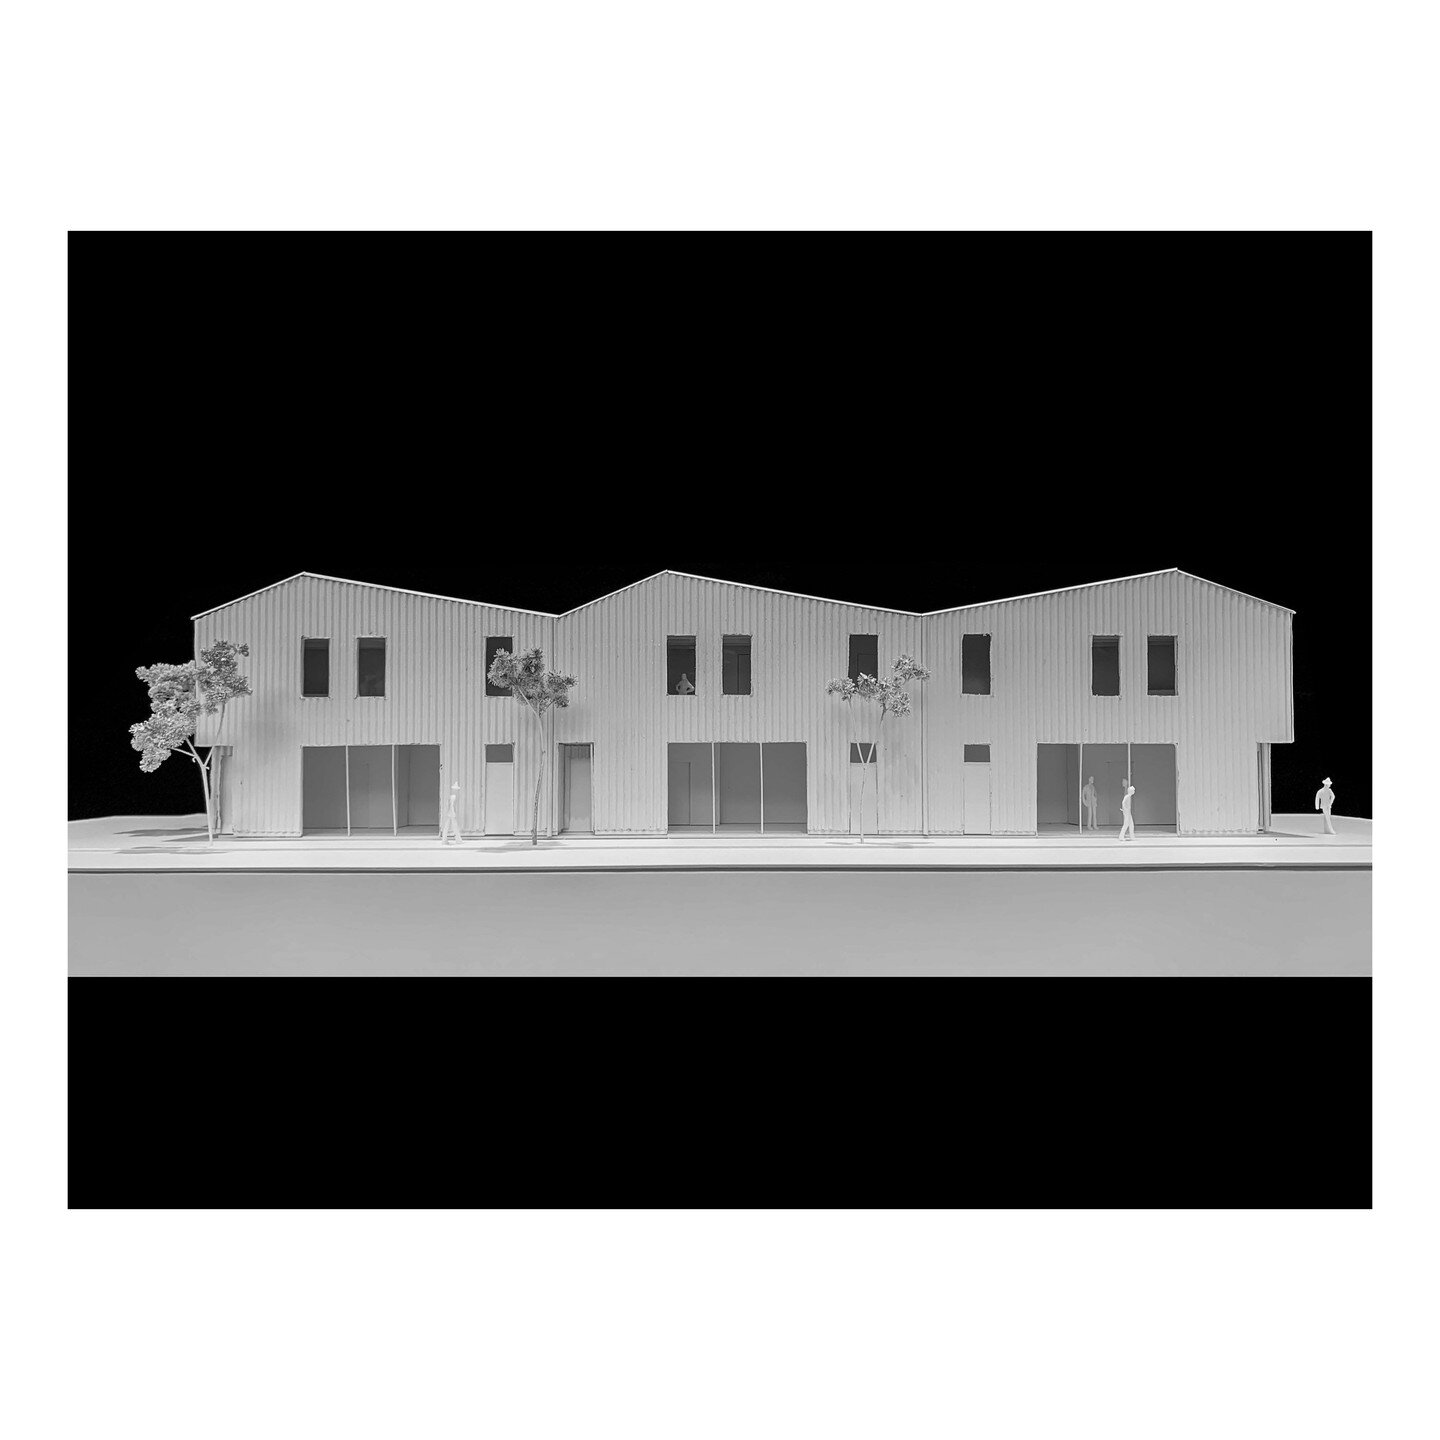 Proposal for three live / work units in Church Hill #liveabovetheshop #modelmonday #architecturalmodel #livework #contextual #architecture #richmond #virginia